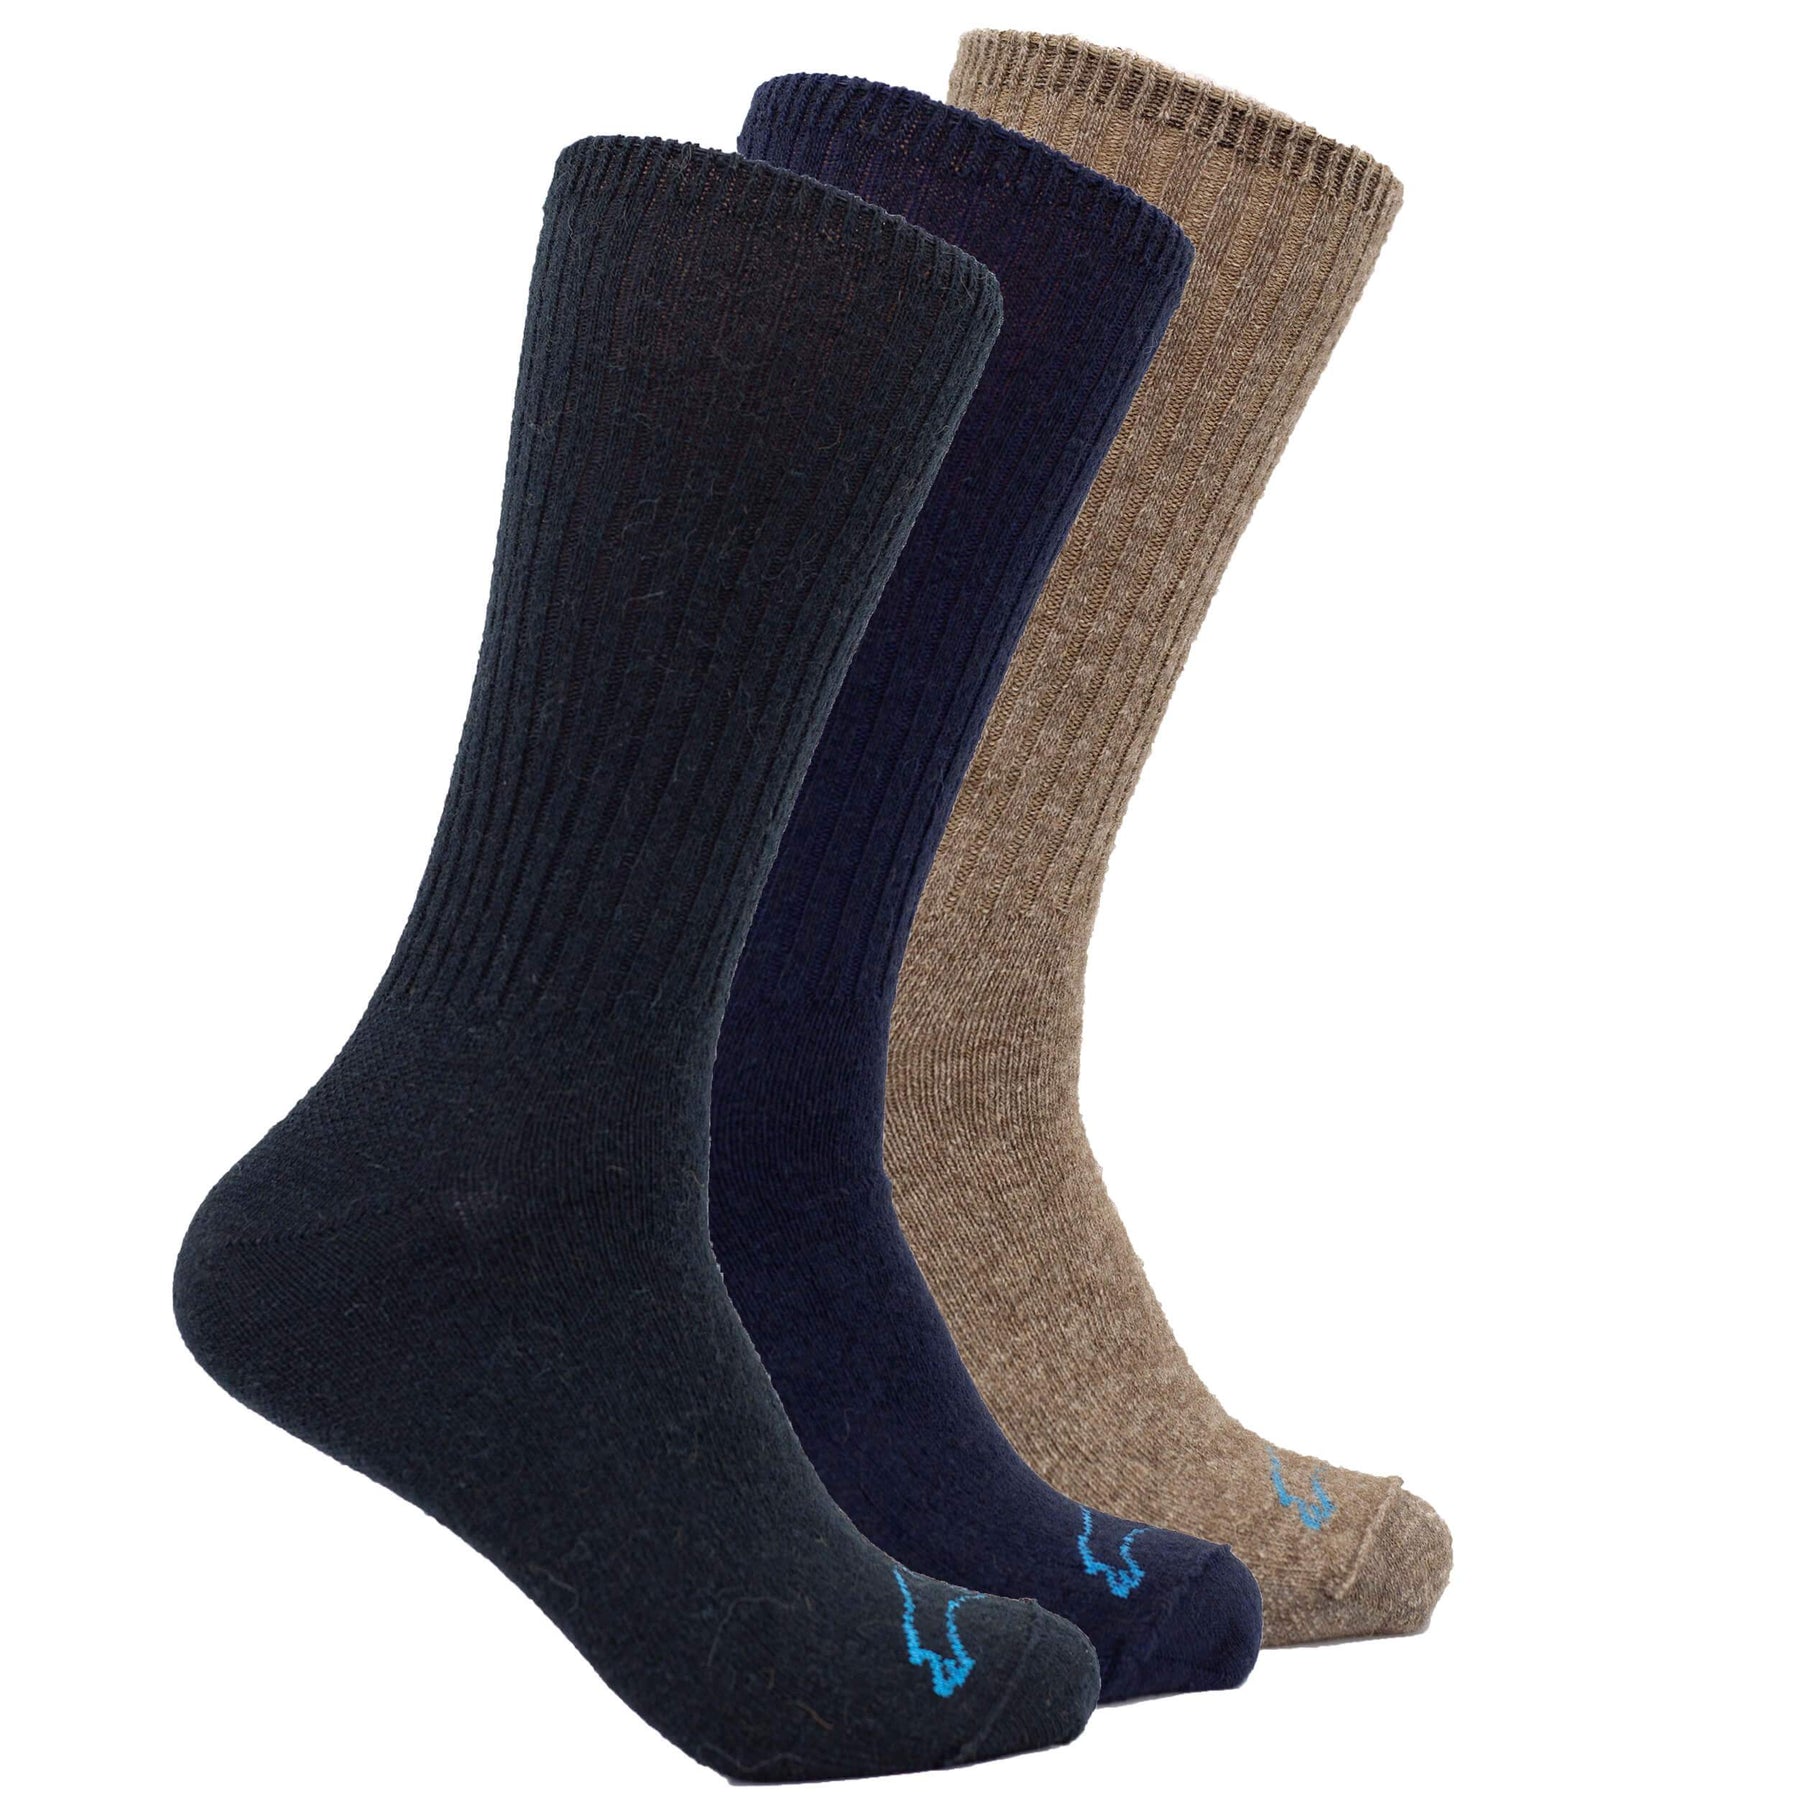 Casual Crew Bison Socks – The Buffalo Wool Co.